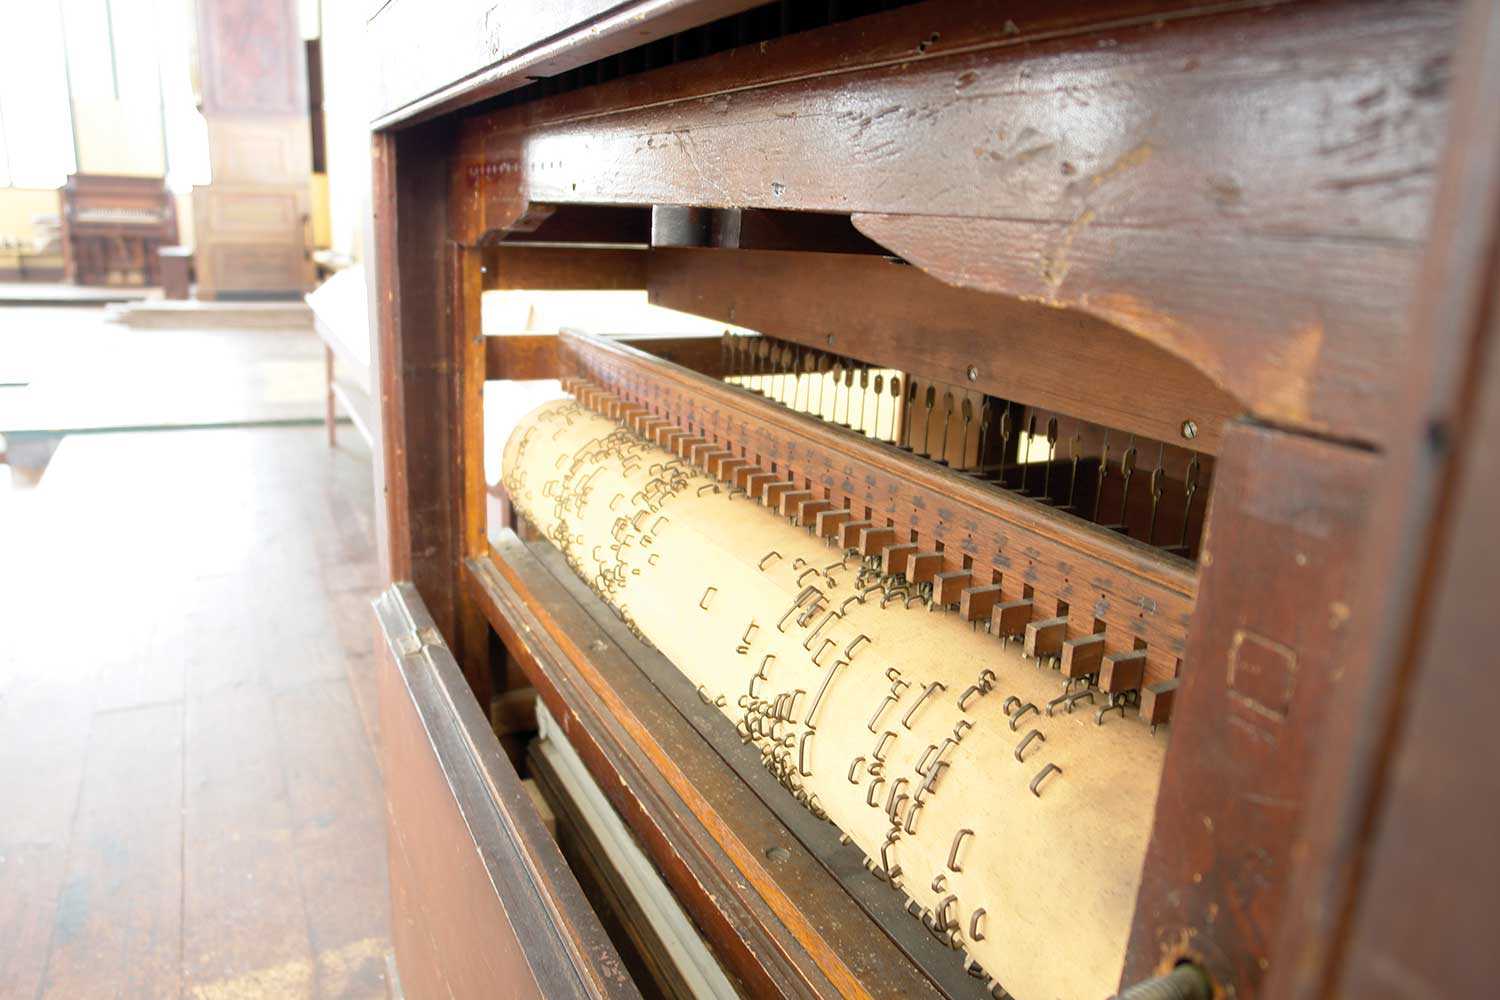 The Sharon Temple’s barrel organ was built around 1830 by Richard Coates (Photo: Katherine Belrose)